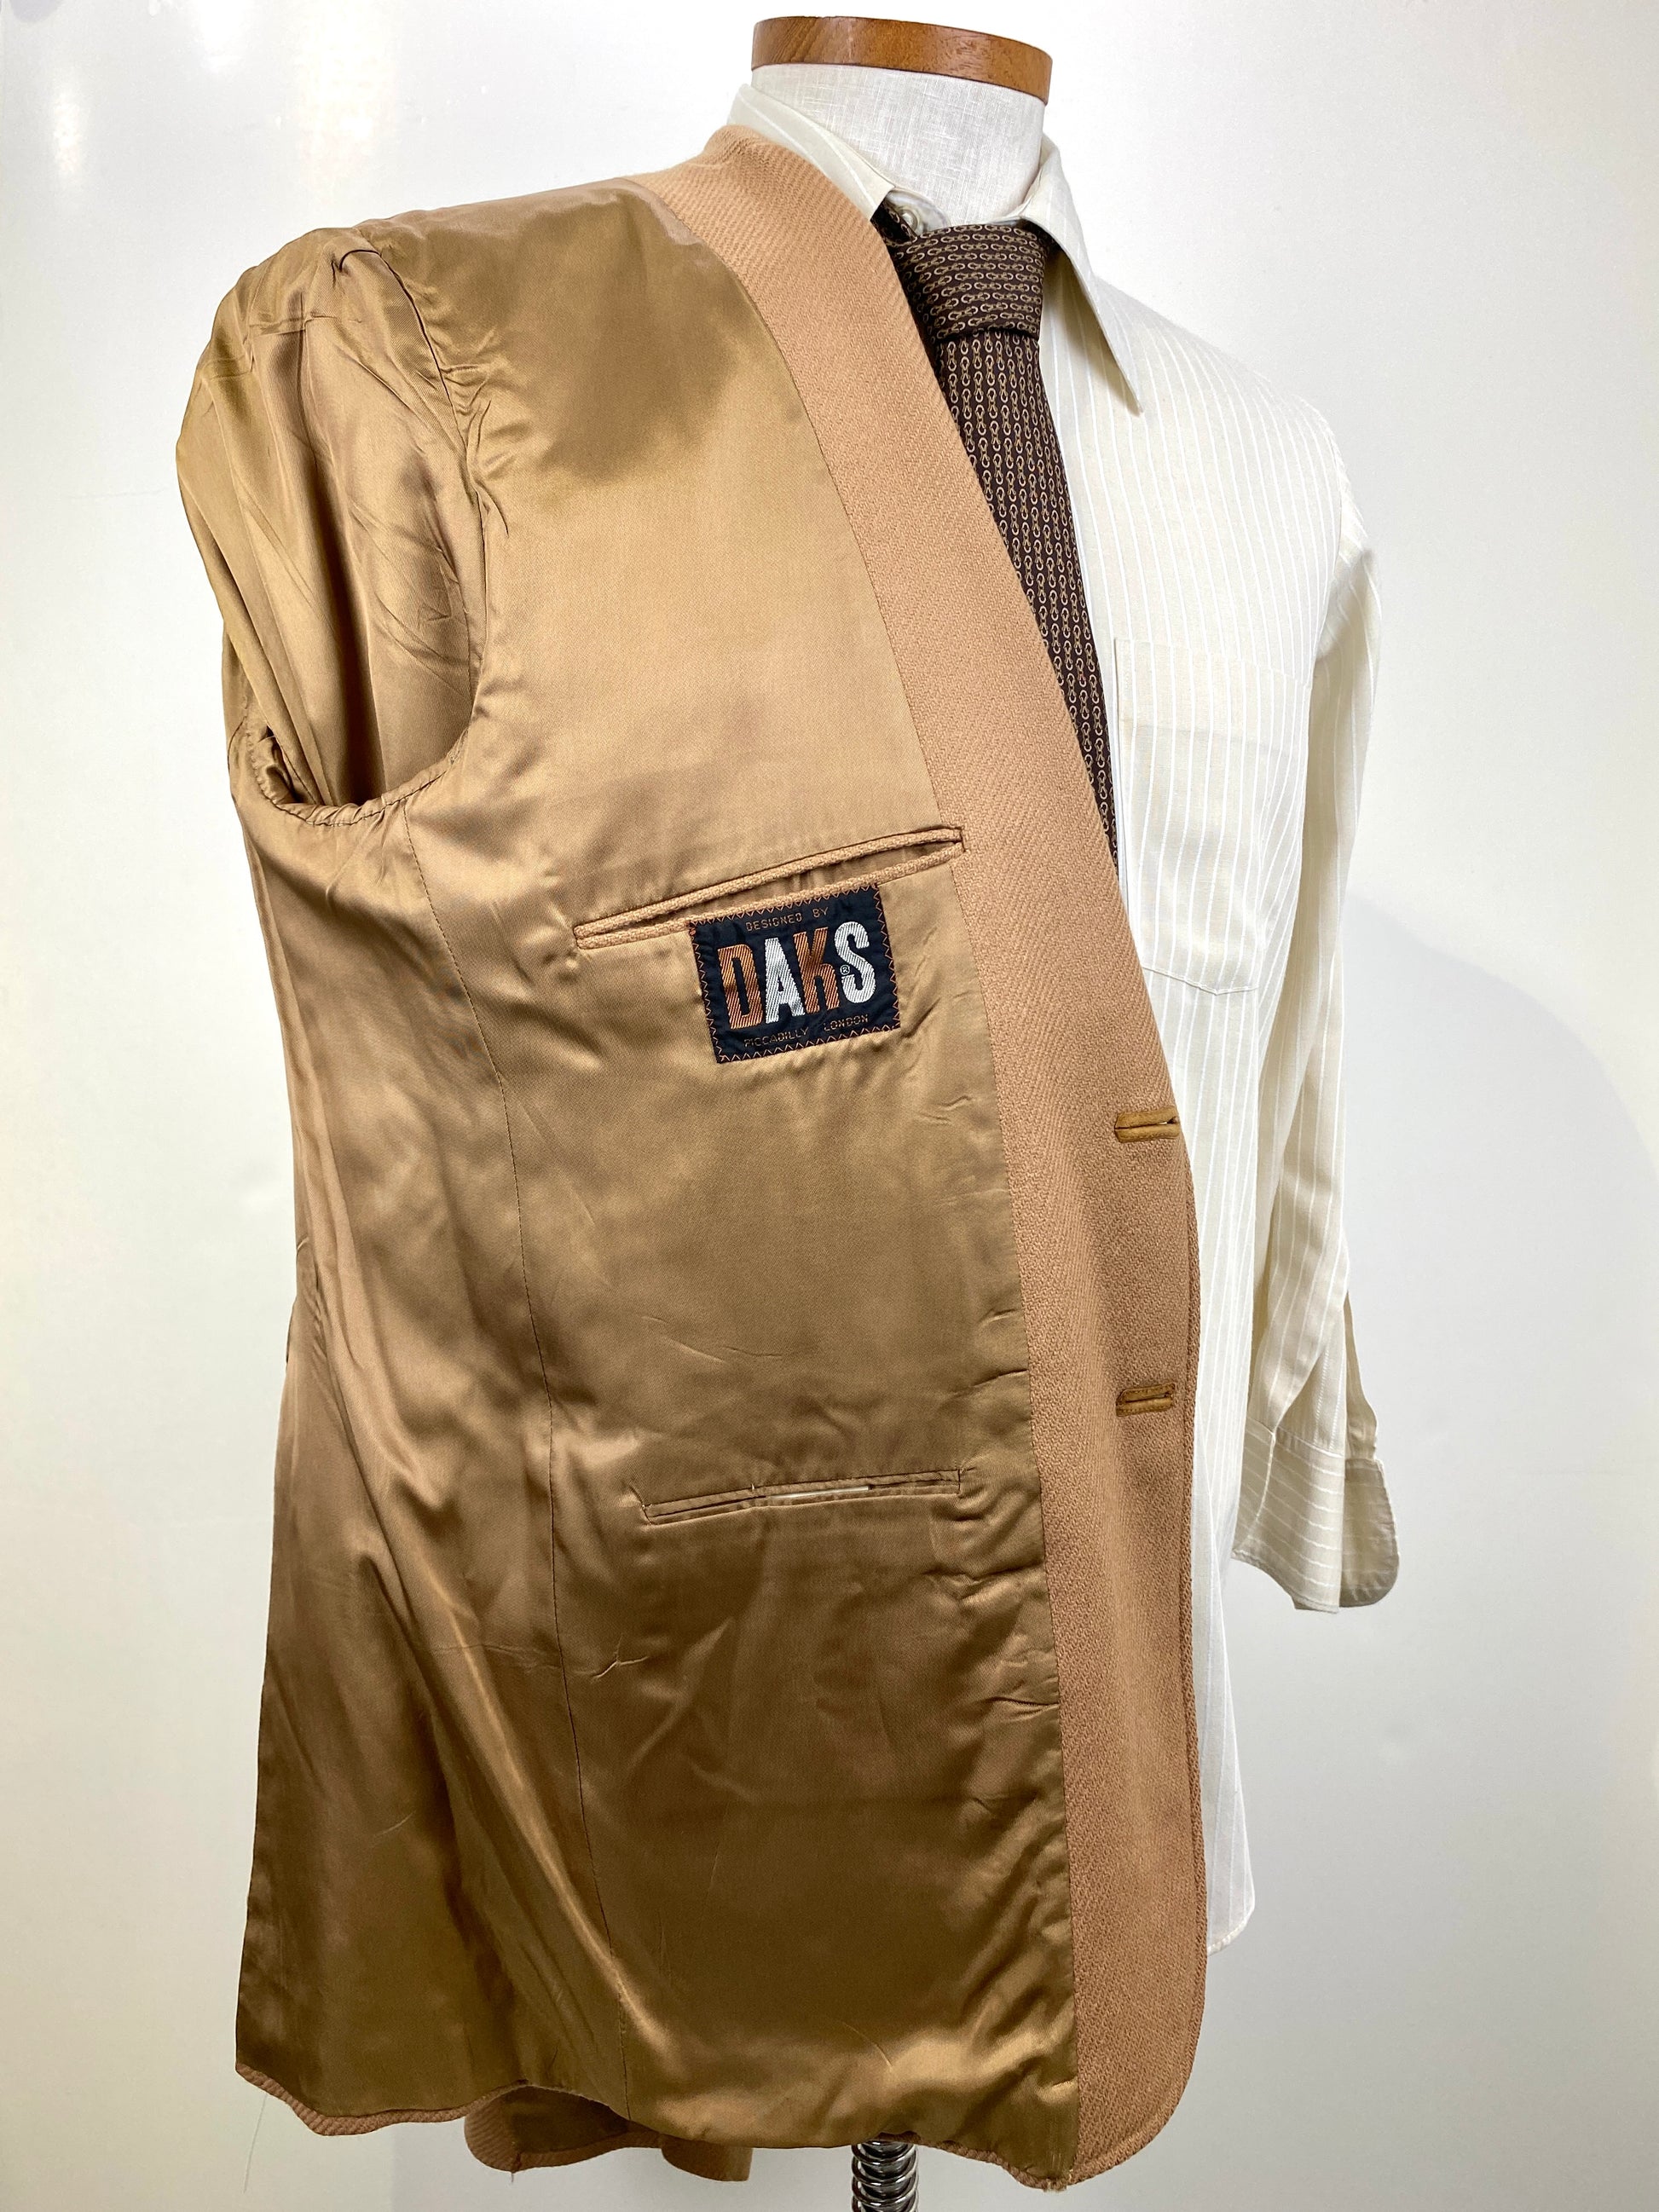 Vintage 1970s Men's Camel Wool Blazer, Dak's London Jacket, C46R